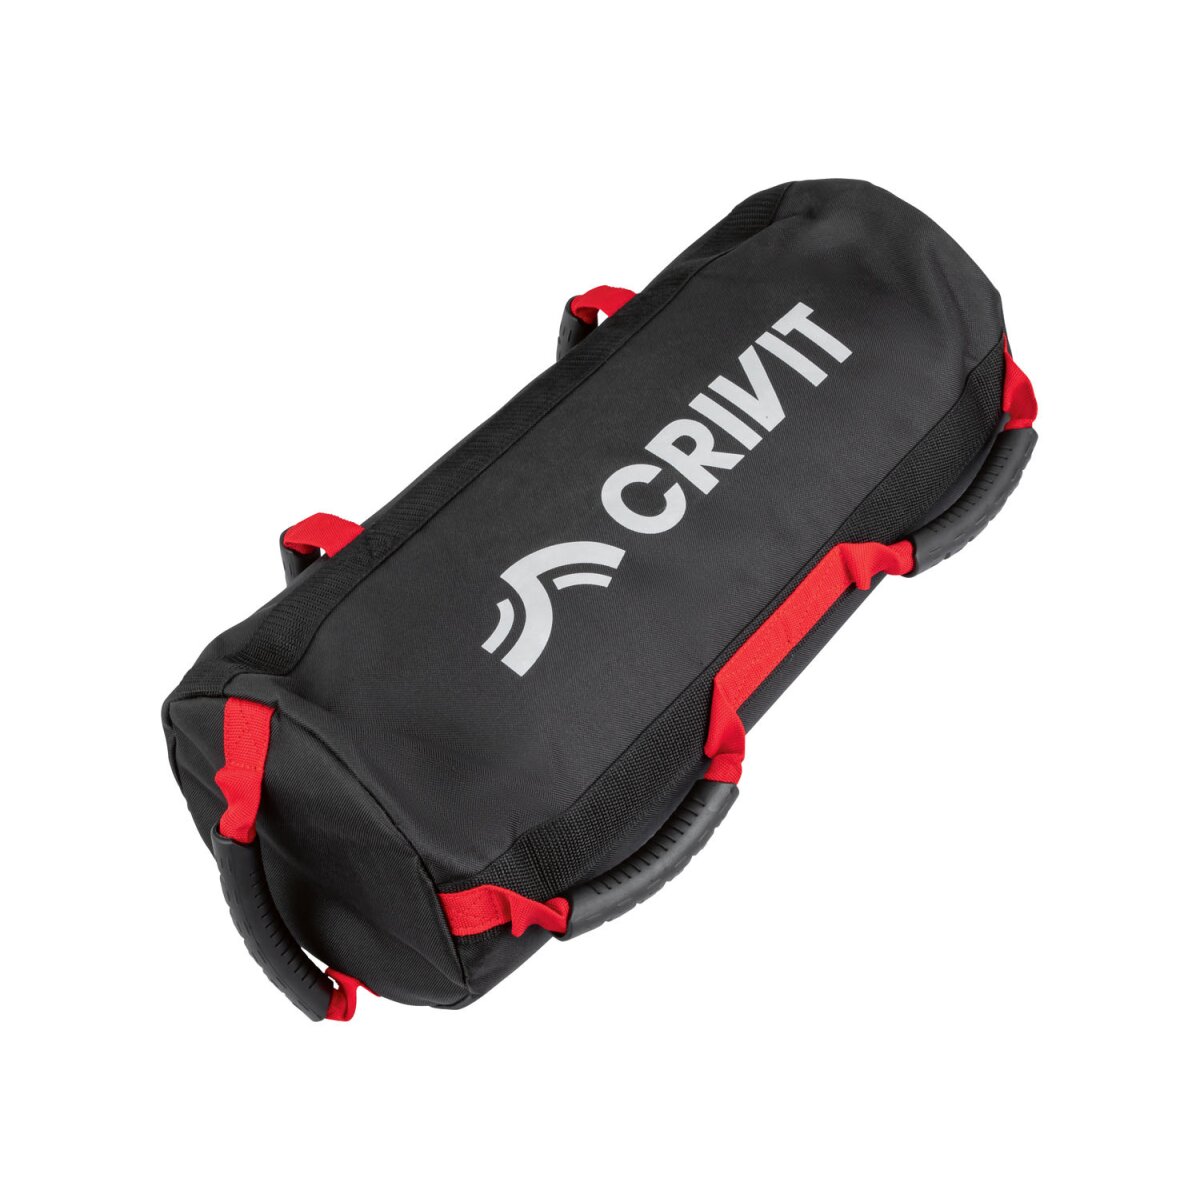 CRIVIT Trainingssandsack 19 kg, variabel - B-Ware neuwertig, 20,99 €